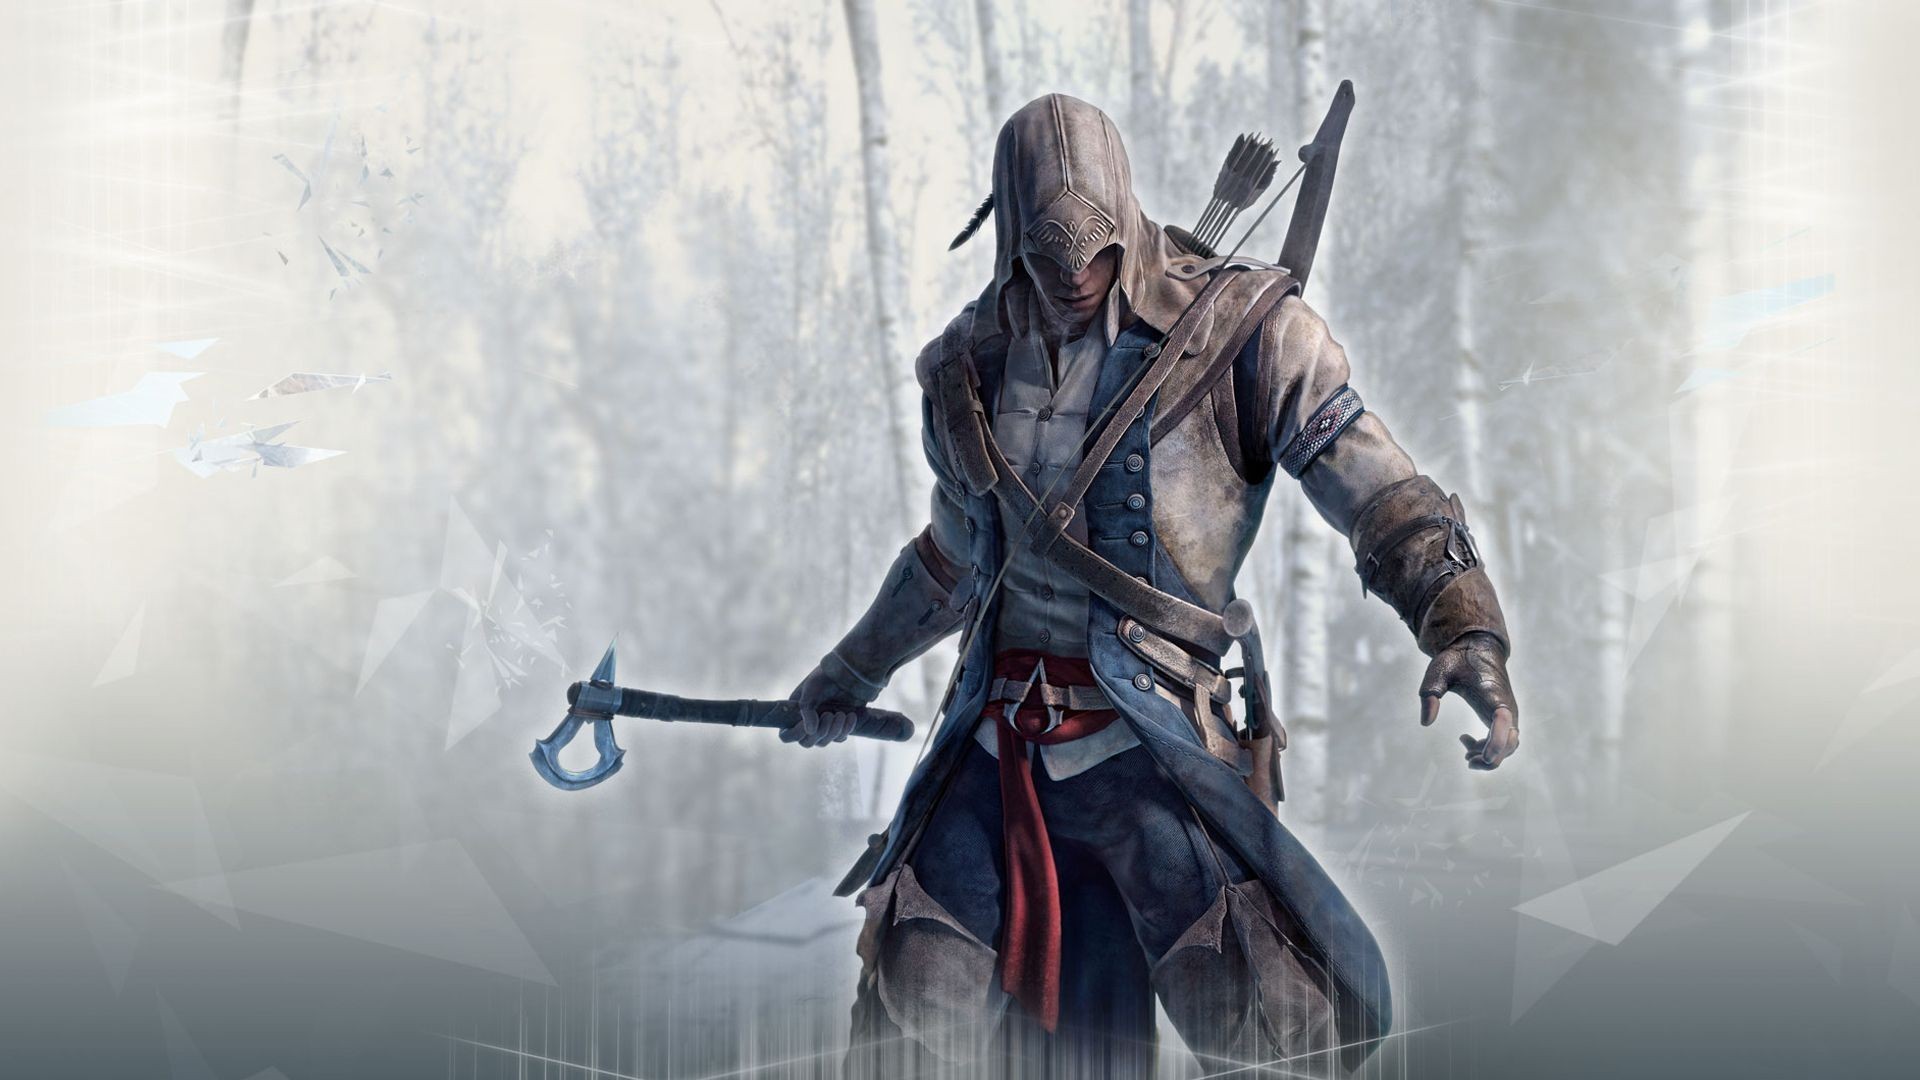 1920x1080  Assassin's Creed 3 Wallpaper Hd - 1405109